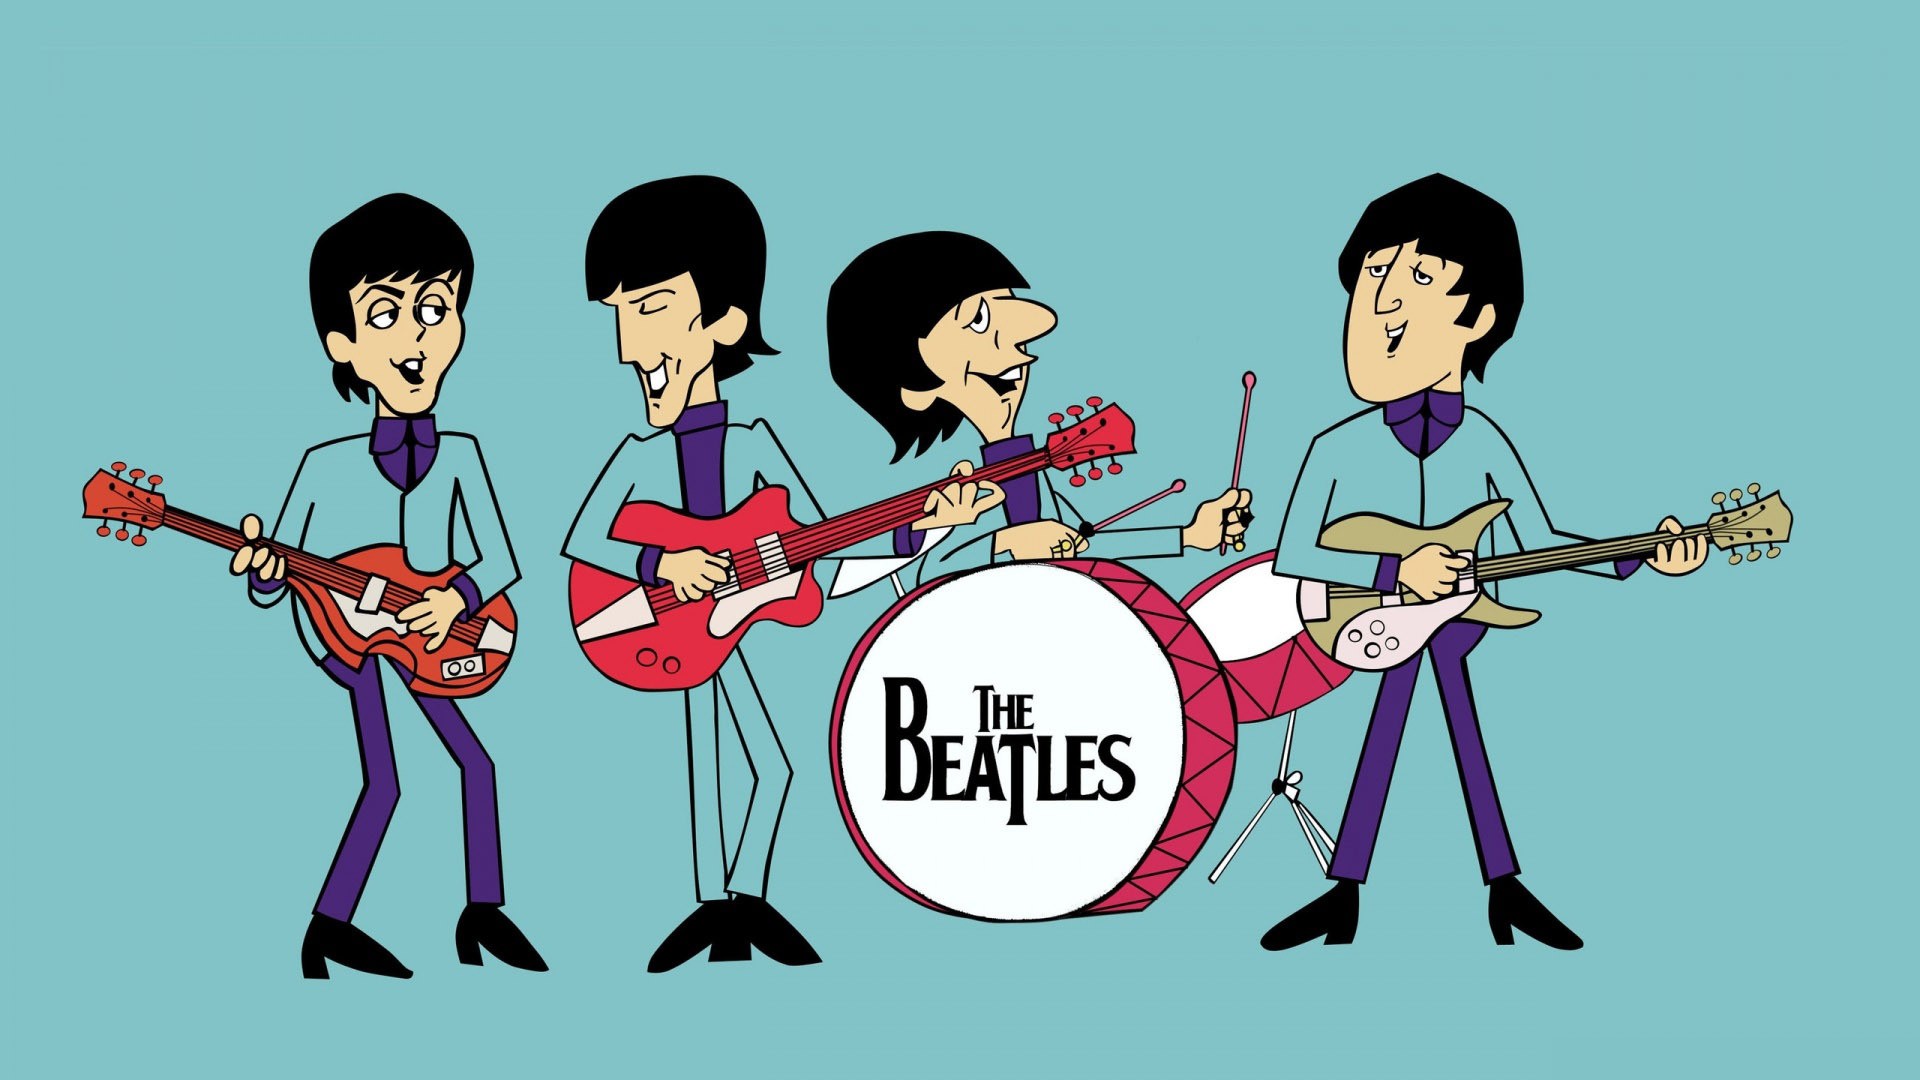 General 1920x1080 musician singer The Beatles cartoon blue background guitar drums John Lennon Paul McCartney George Harrison Ringo Starr legend music cyan cyan background